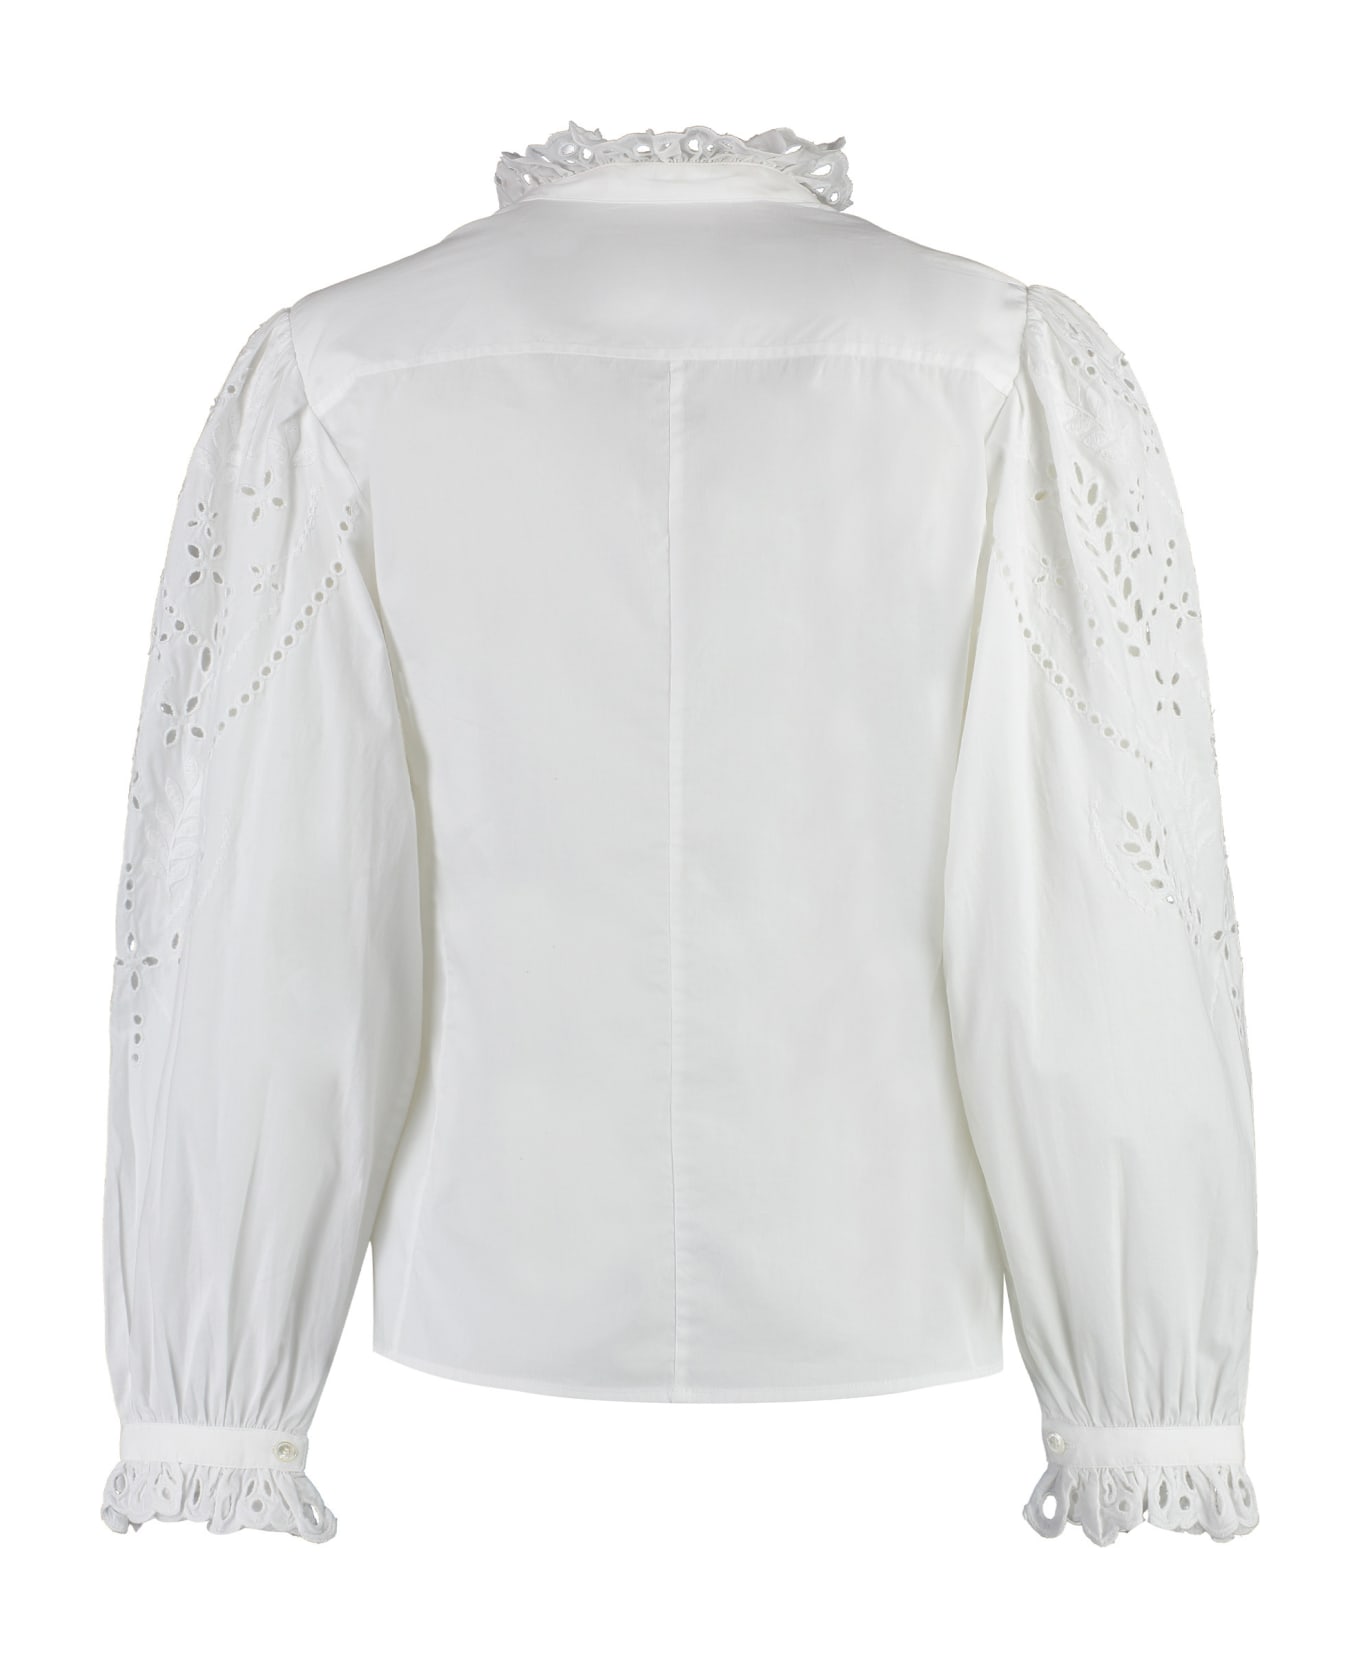 Marant Étoile Raissa Shirt - White ブラウス